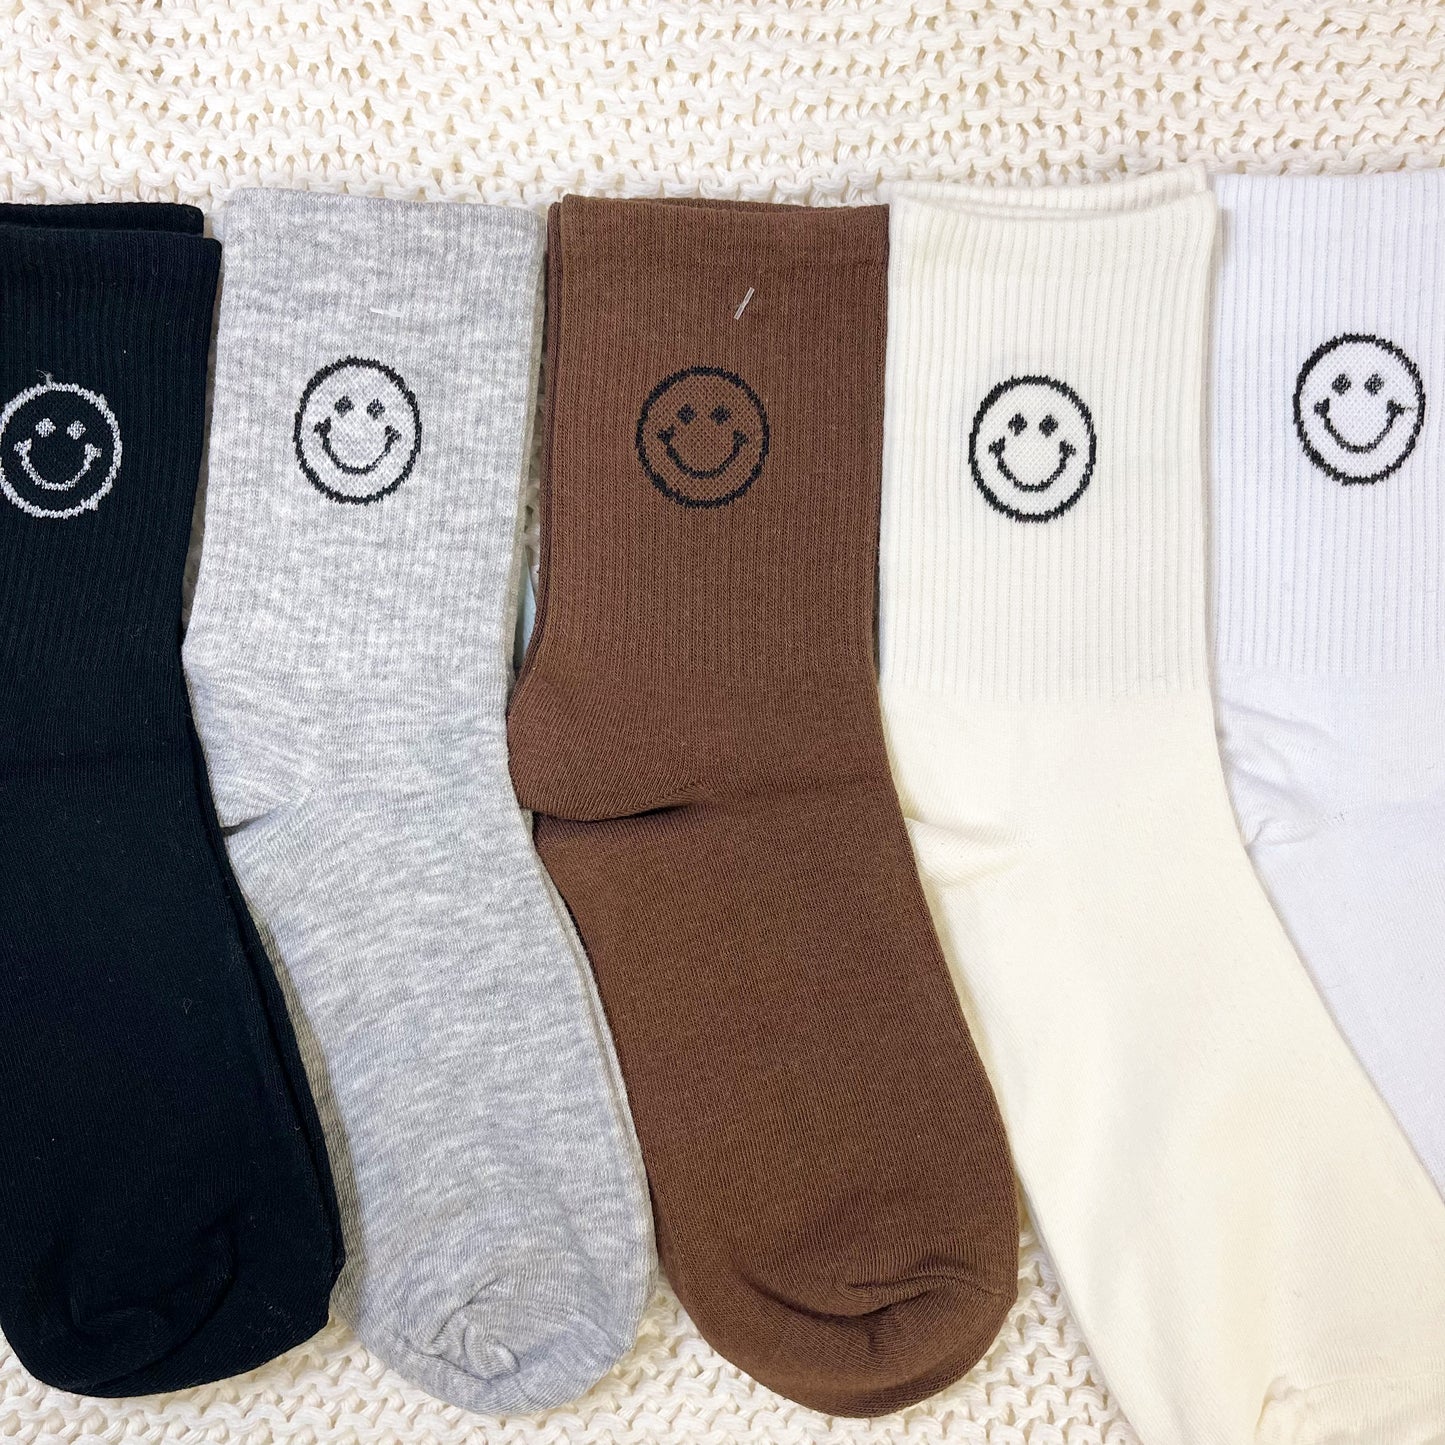 Neutral smiley face socks